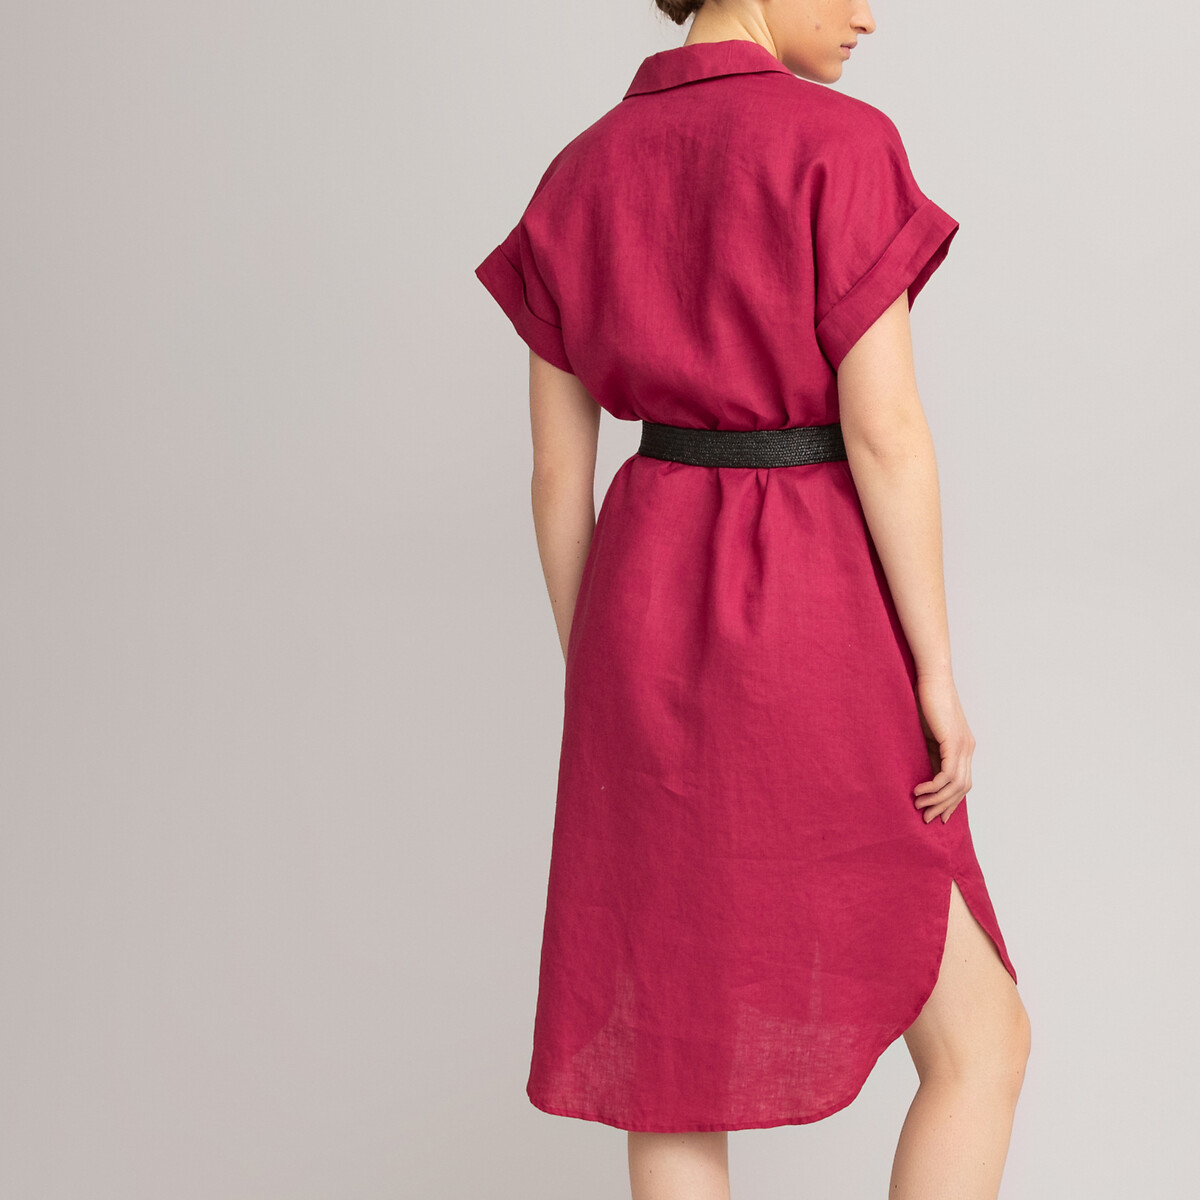 Платье-рубашка LaRedoute С короткими рукавами из льна 34 (FR) - 40 (RUS) розовый, размер 34 (FR) - 40 (RUS) С короткими рукавами из льна 34 (FR) - 40 (RUS) розовый - фото 4